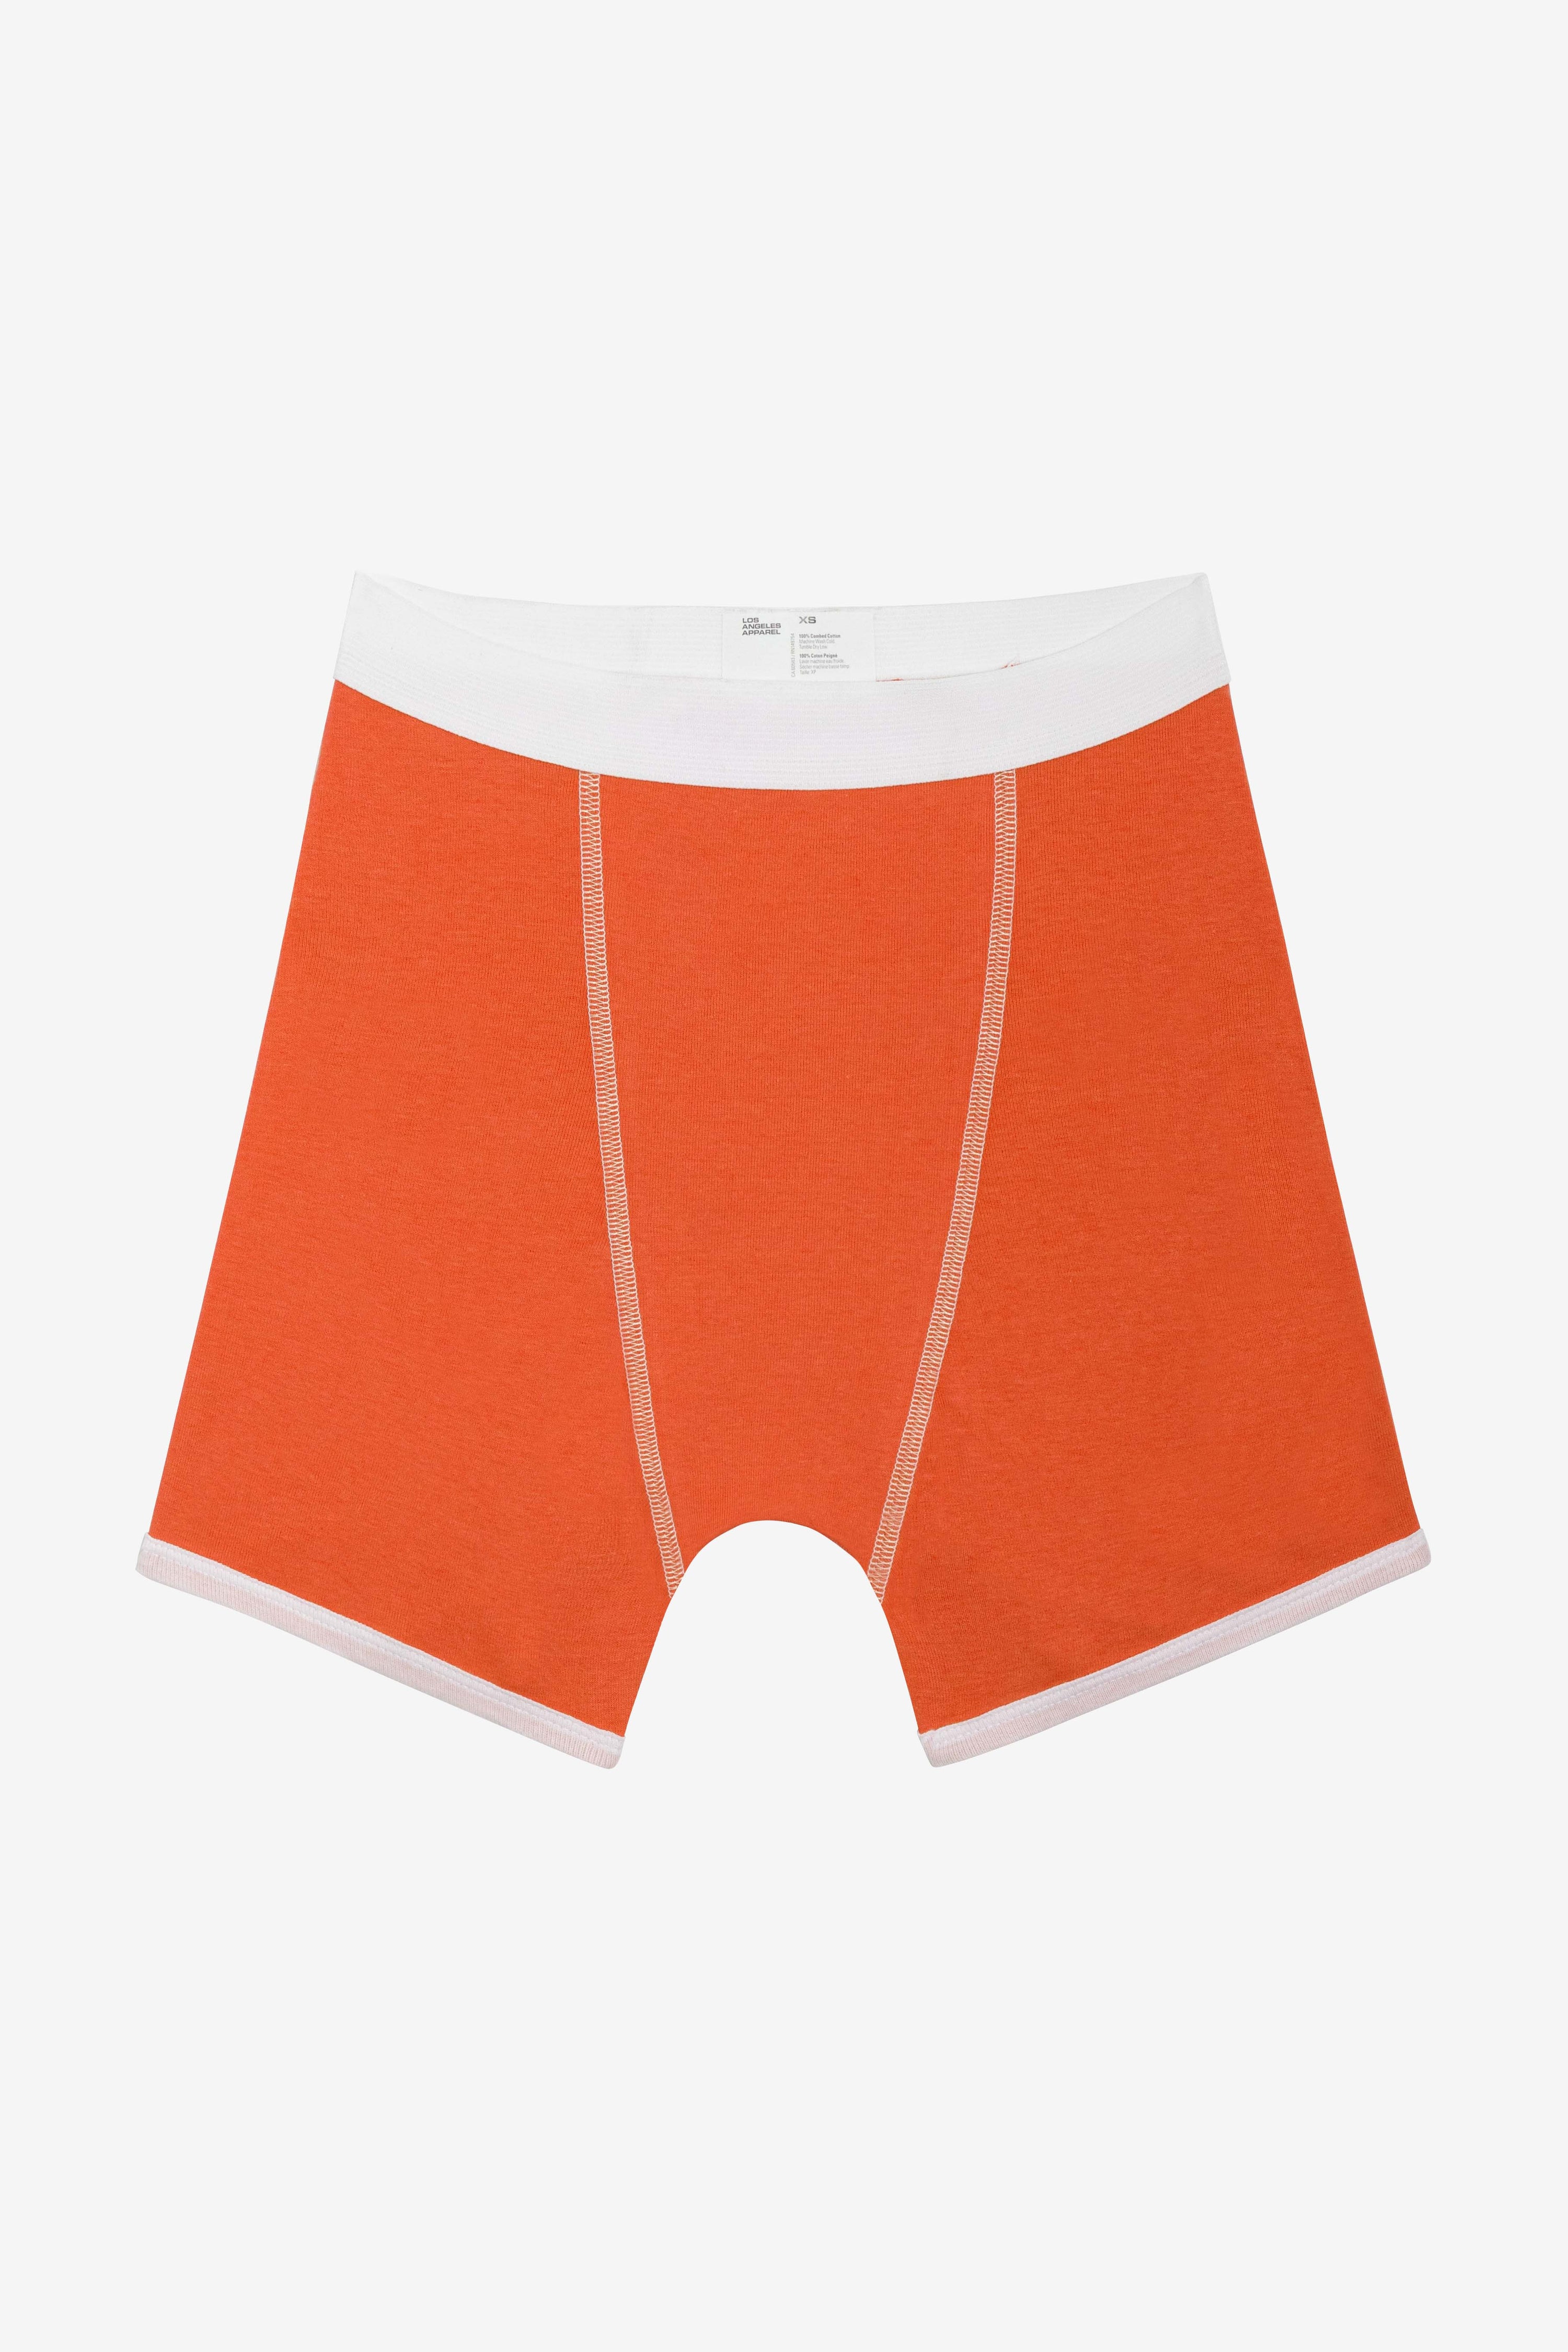 Men's Gray Calvin Klein Underwear: 17 Items in Stock